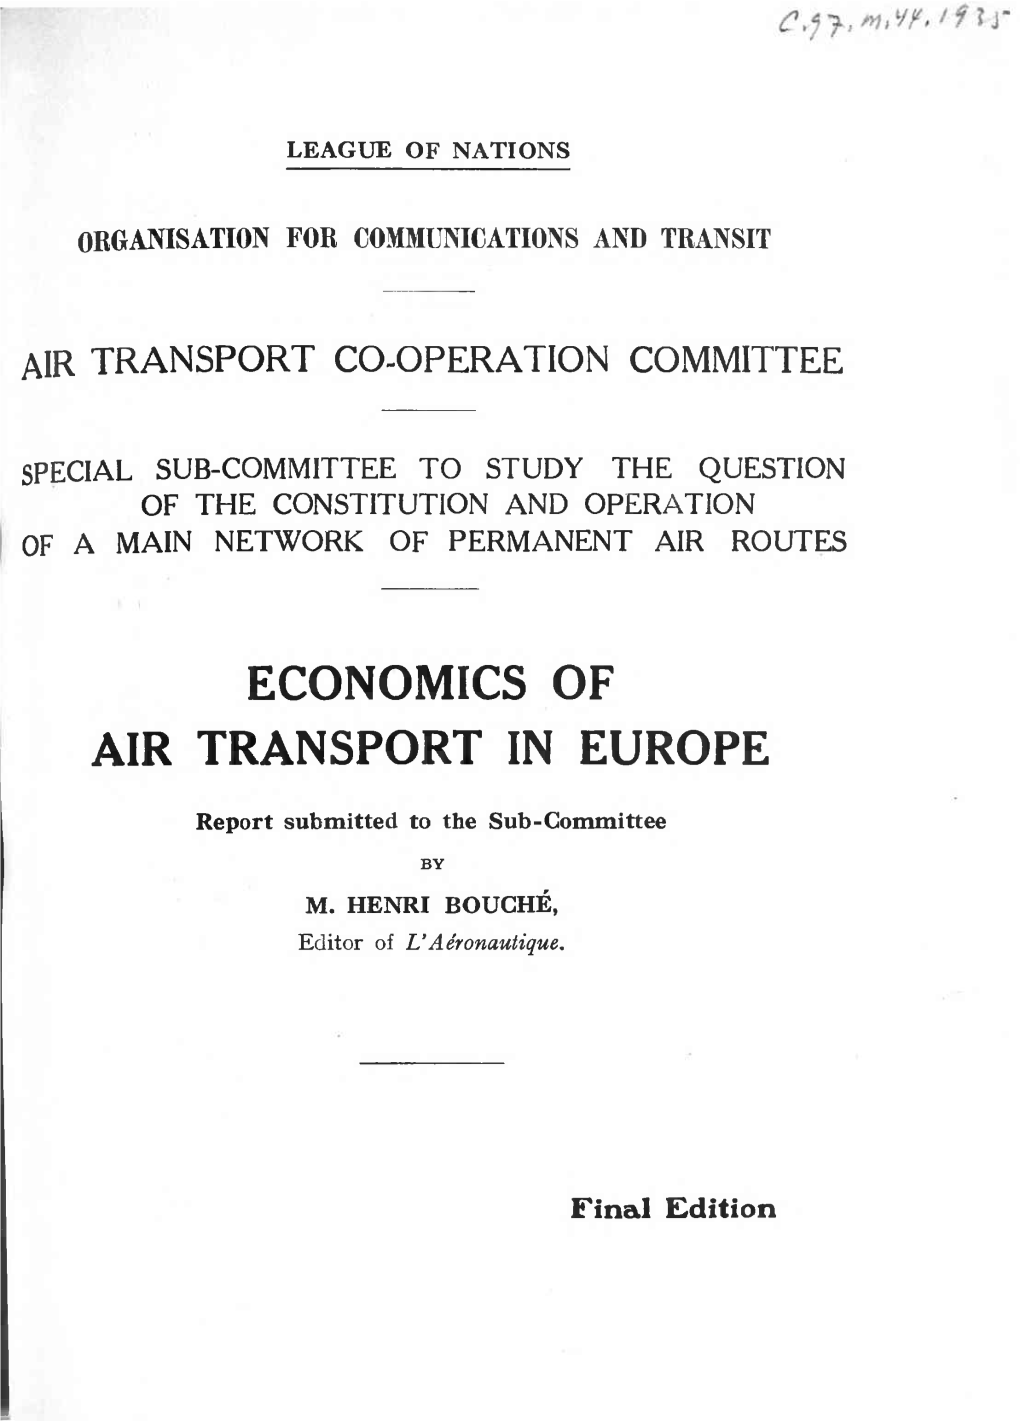 Economics of Air Transport in Europe